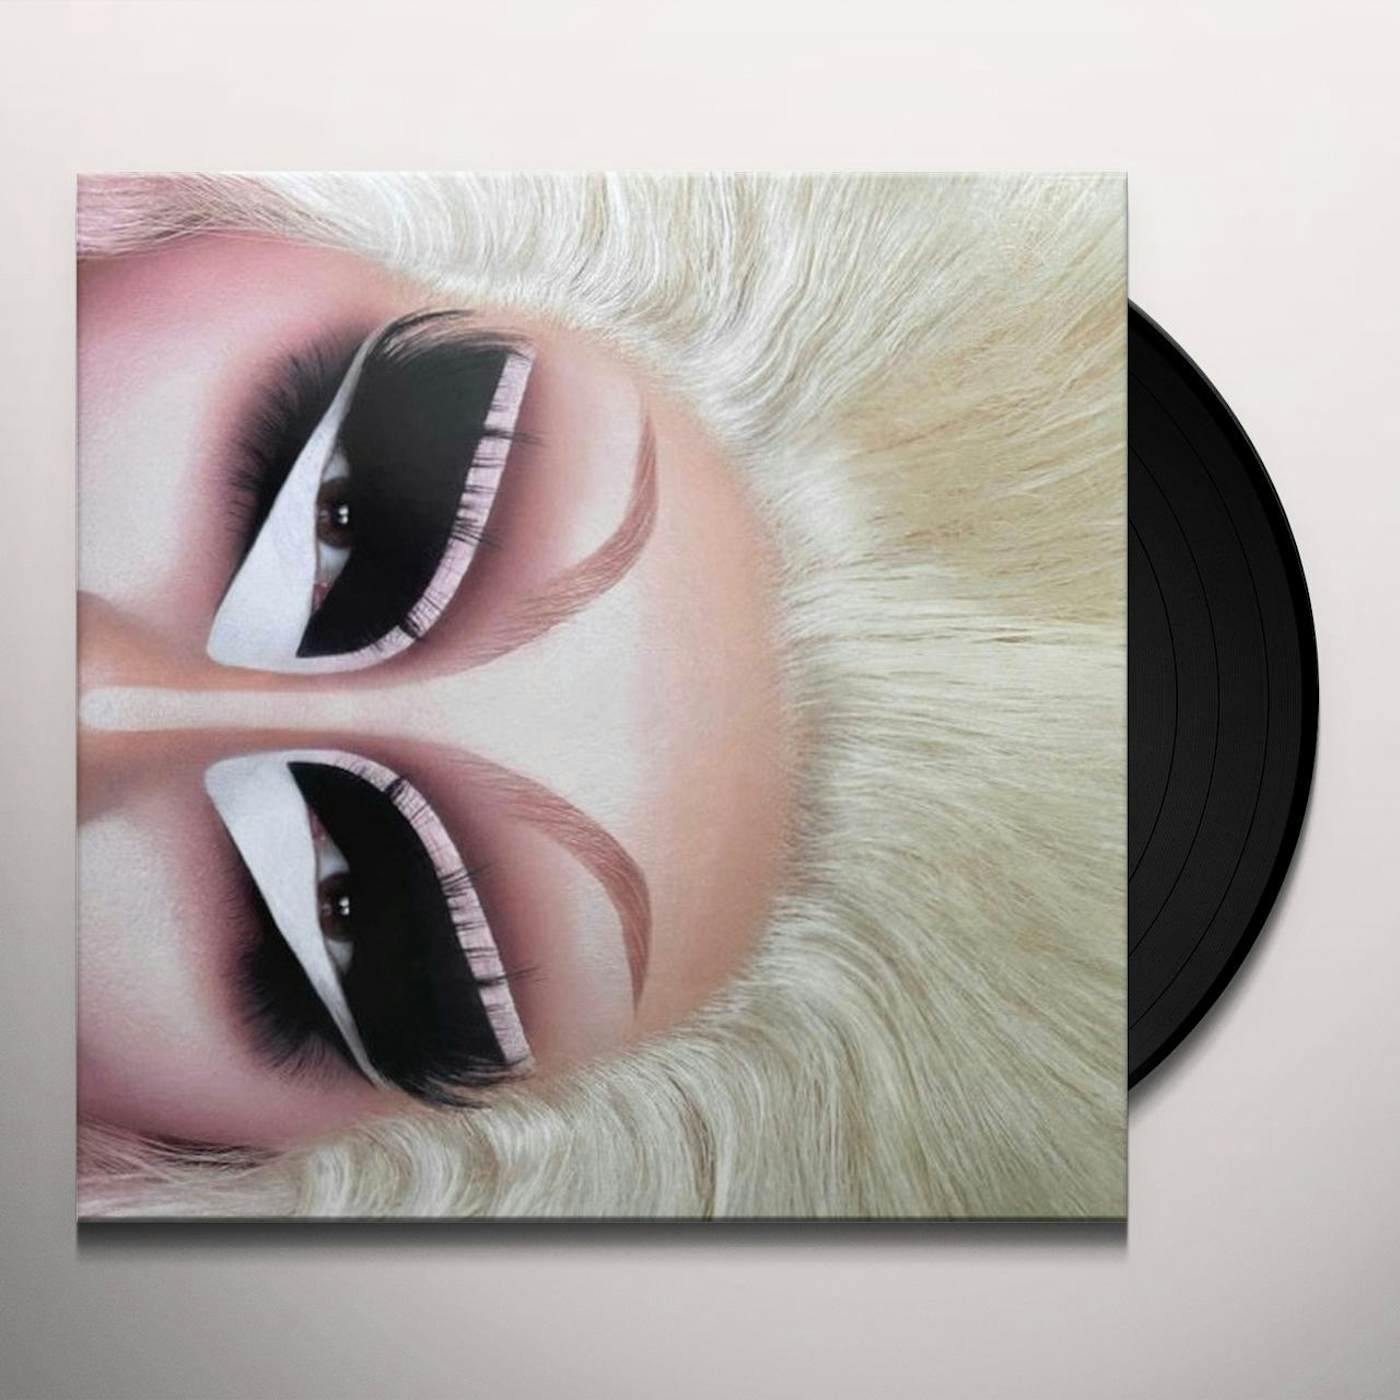 Trixie Mattel Blonde & Pink Albums Vinyl Record